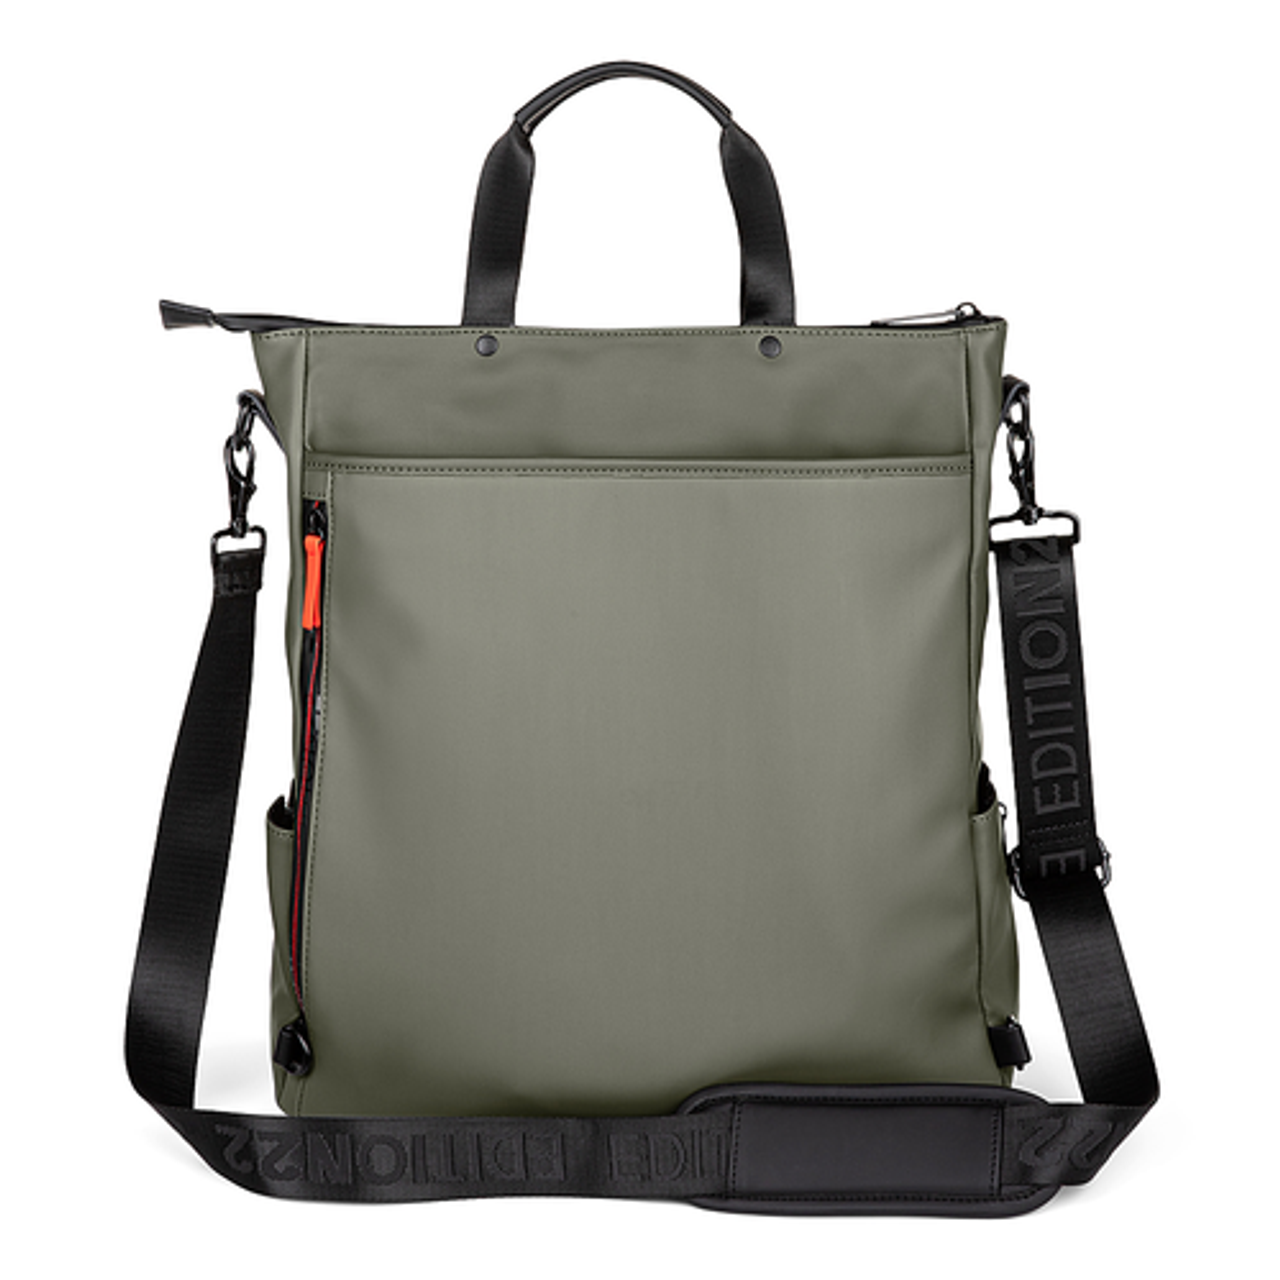 Bugatti - E22 - EDITION 22 - Business Tote bag Convertible into a Backpack - Khaki